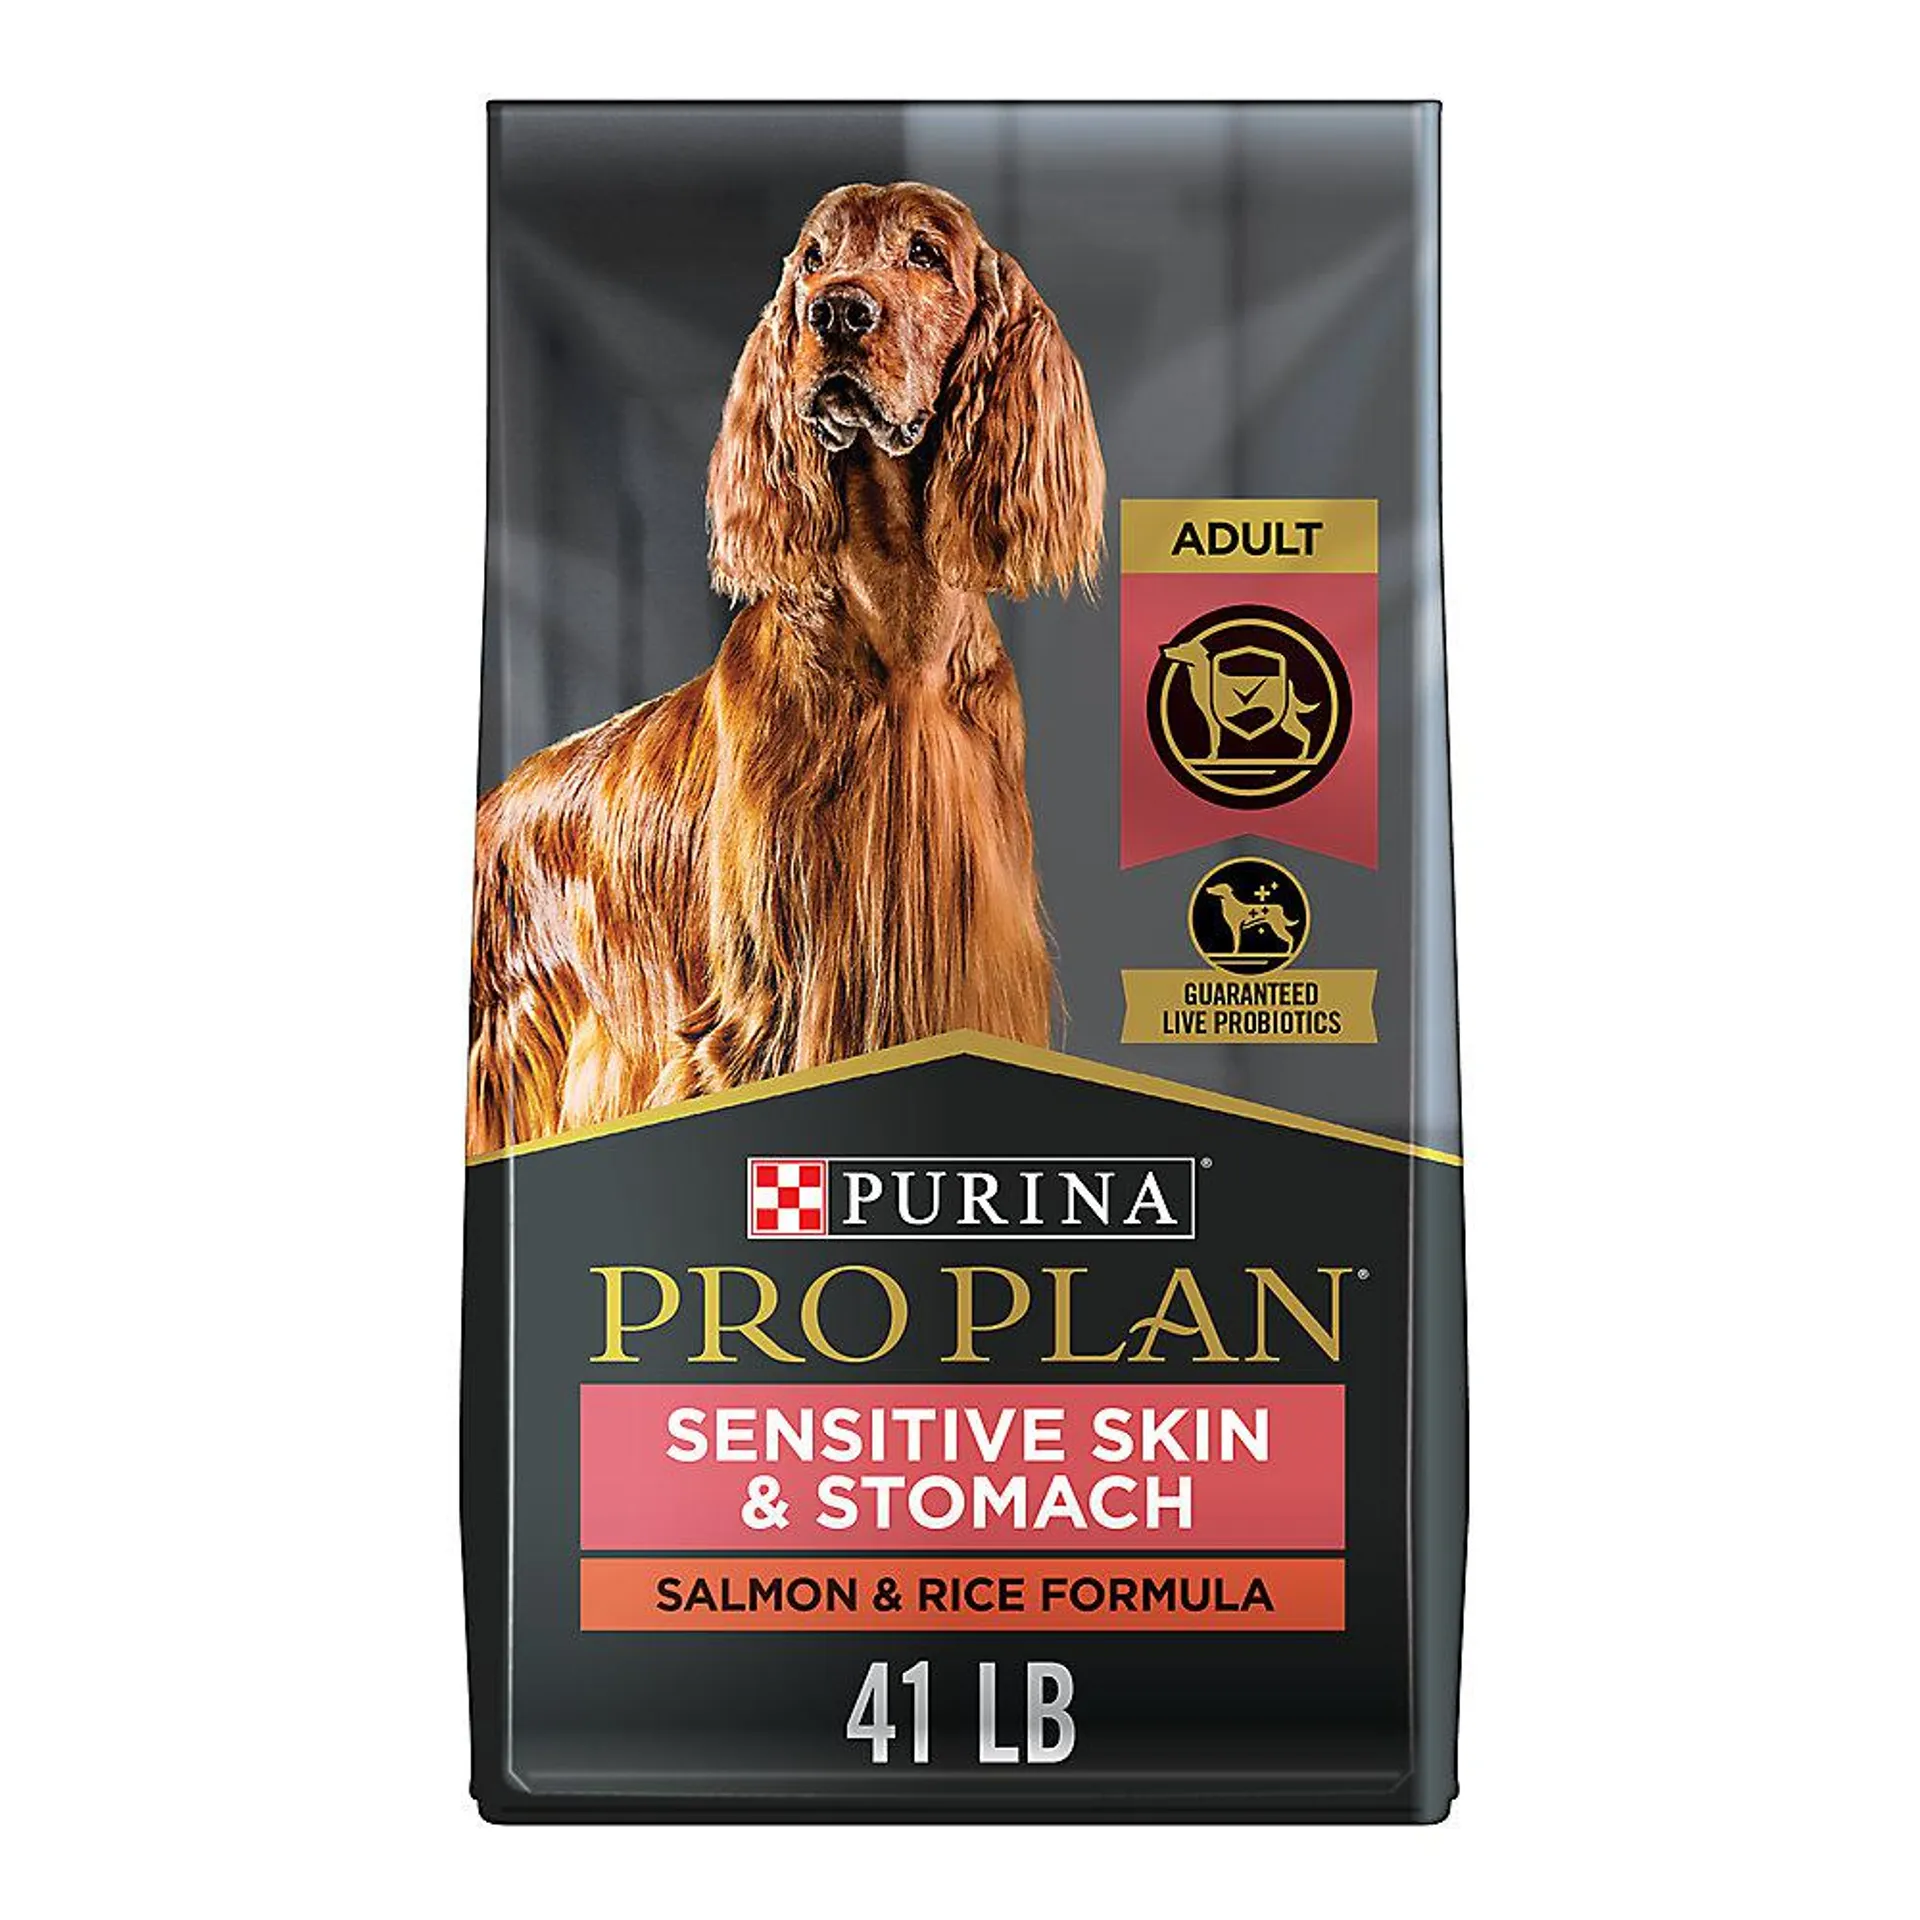 Purina Pro Plan Focus Adult Dry Dog Food - Sensitive Skin & Stomach, Salmon & Rice